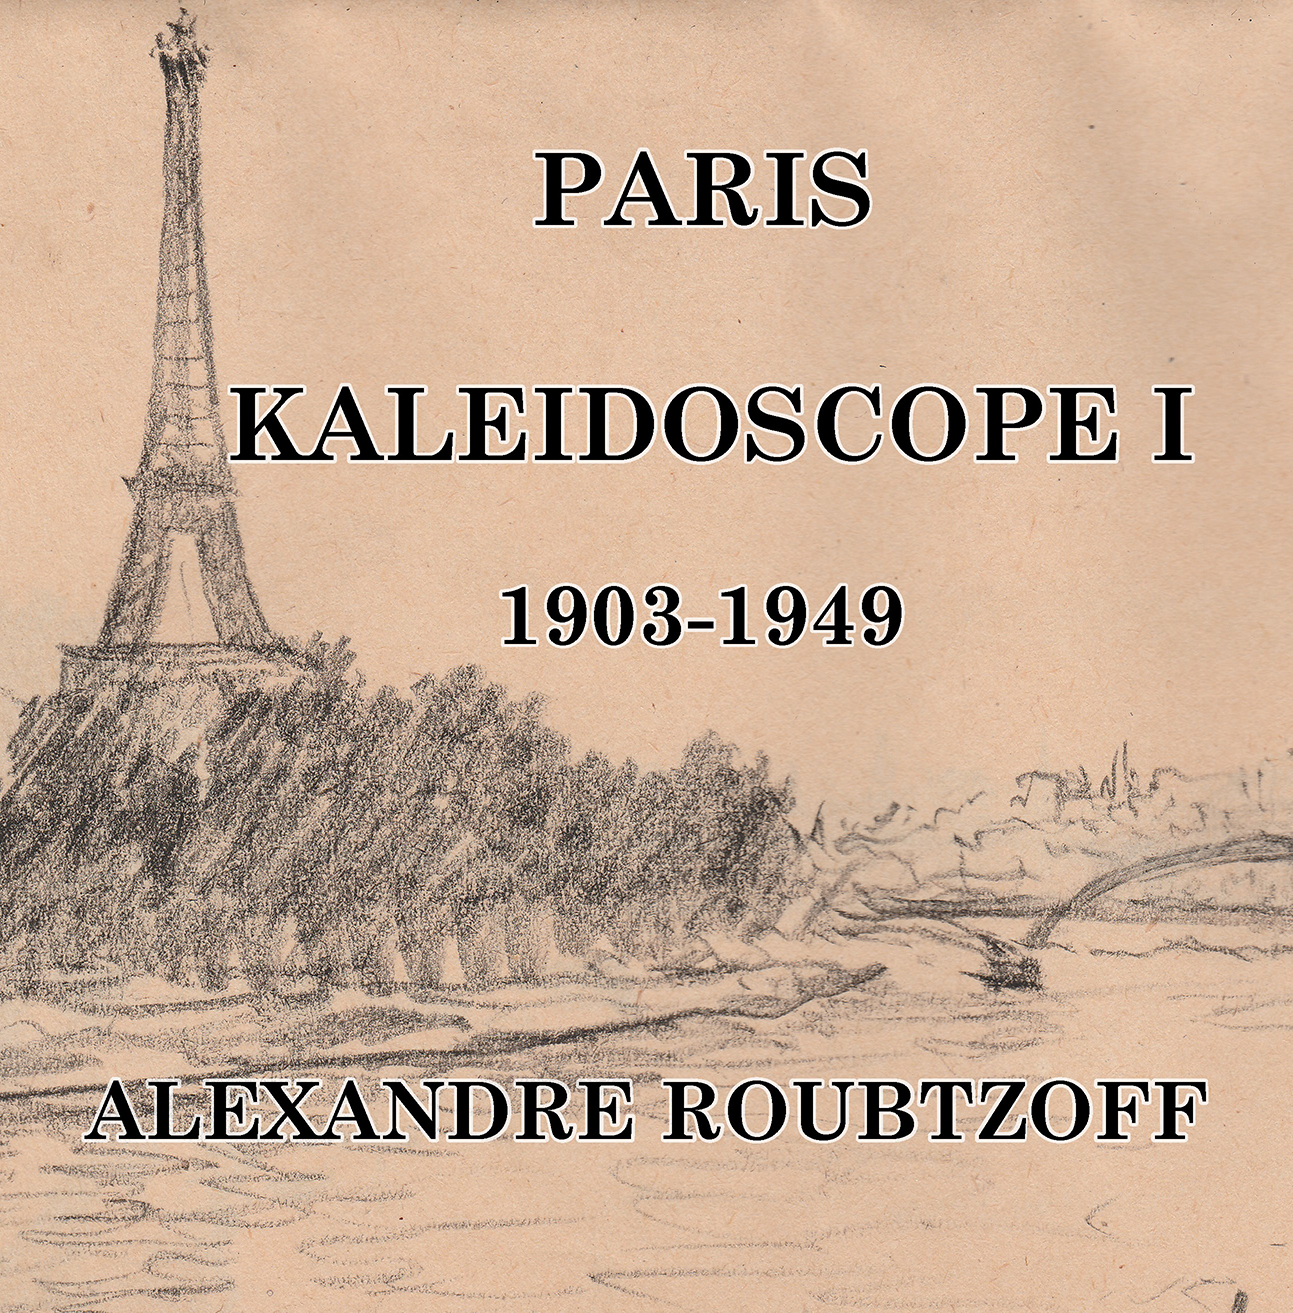 Paris - Kalidoscope I